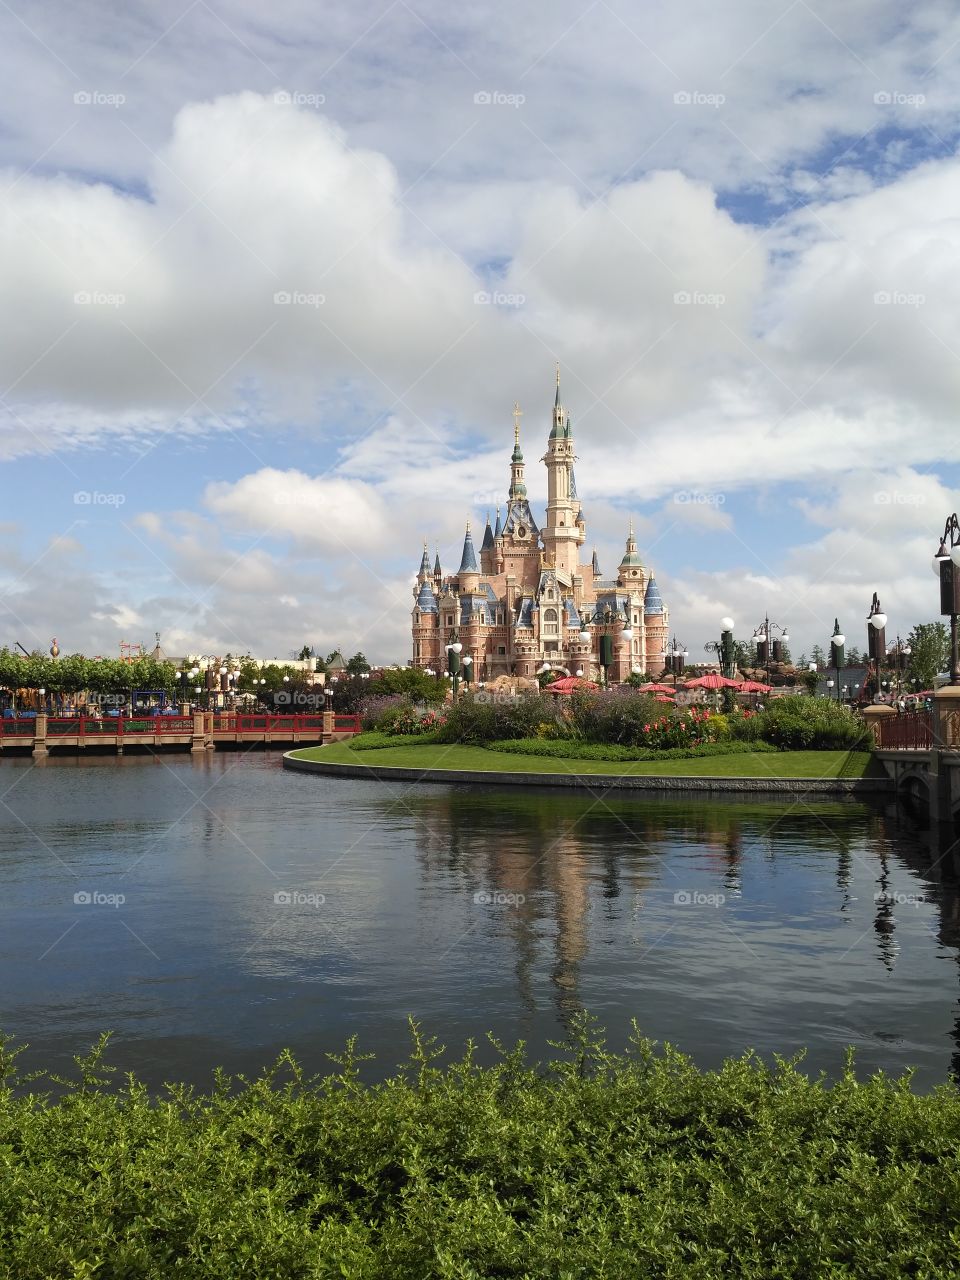 Disney castle in Shanghai